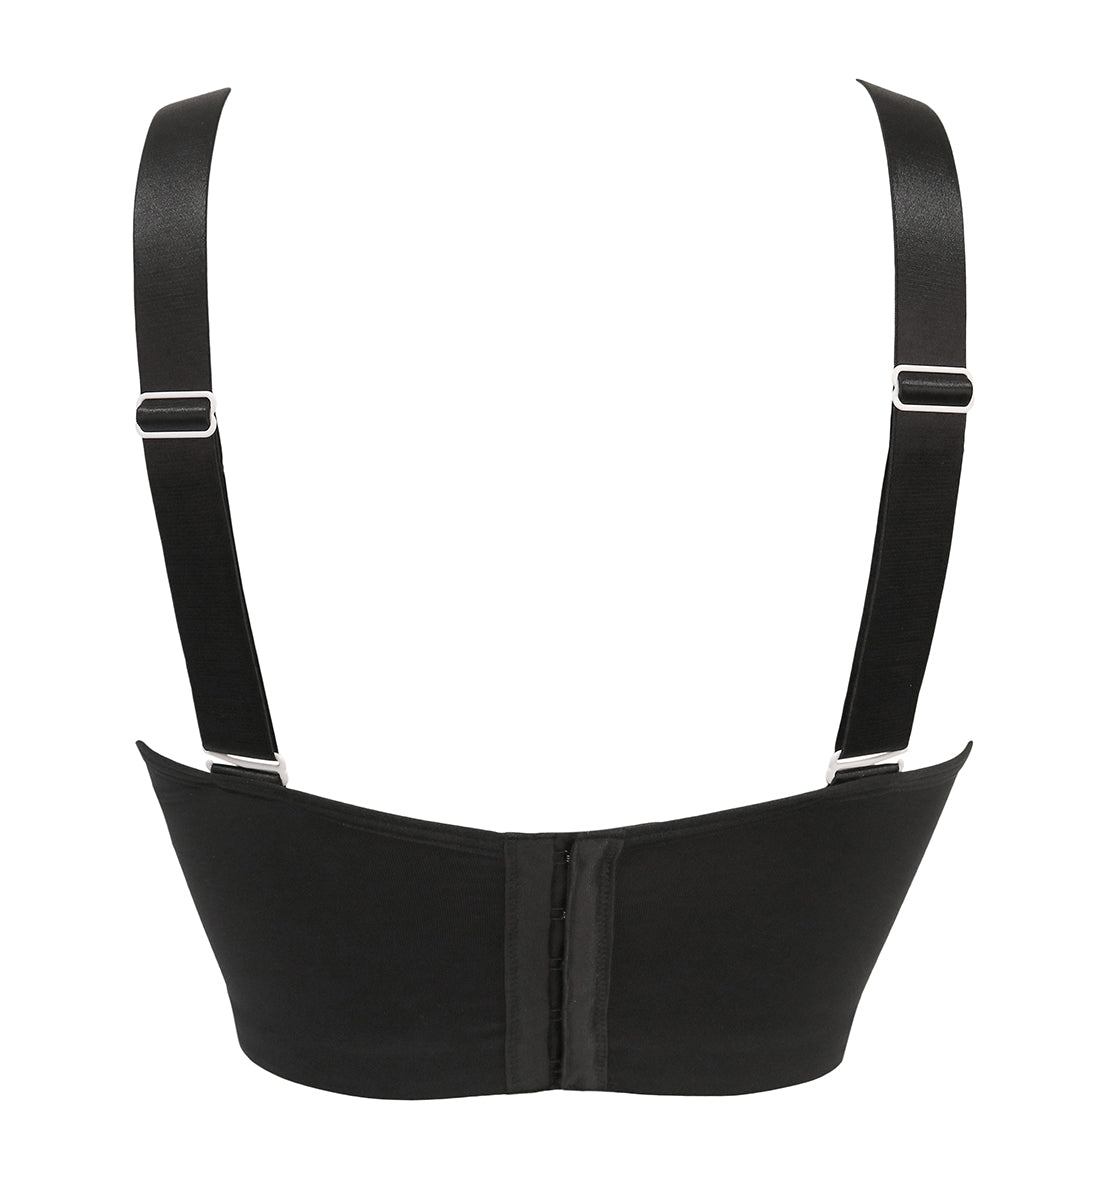 Pour Moi Fuller Bust Pulse longline underwire sports bra in black